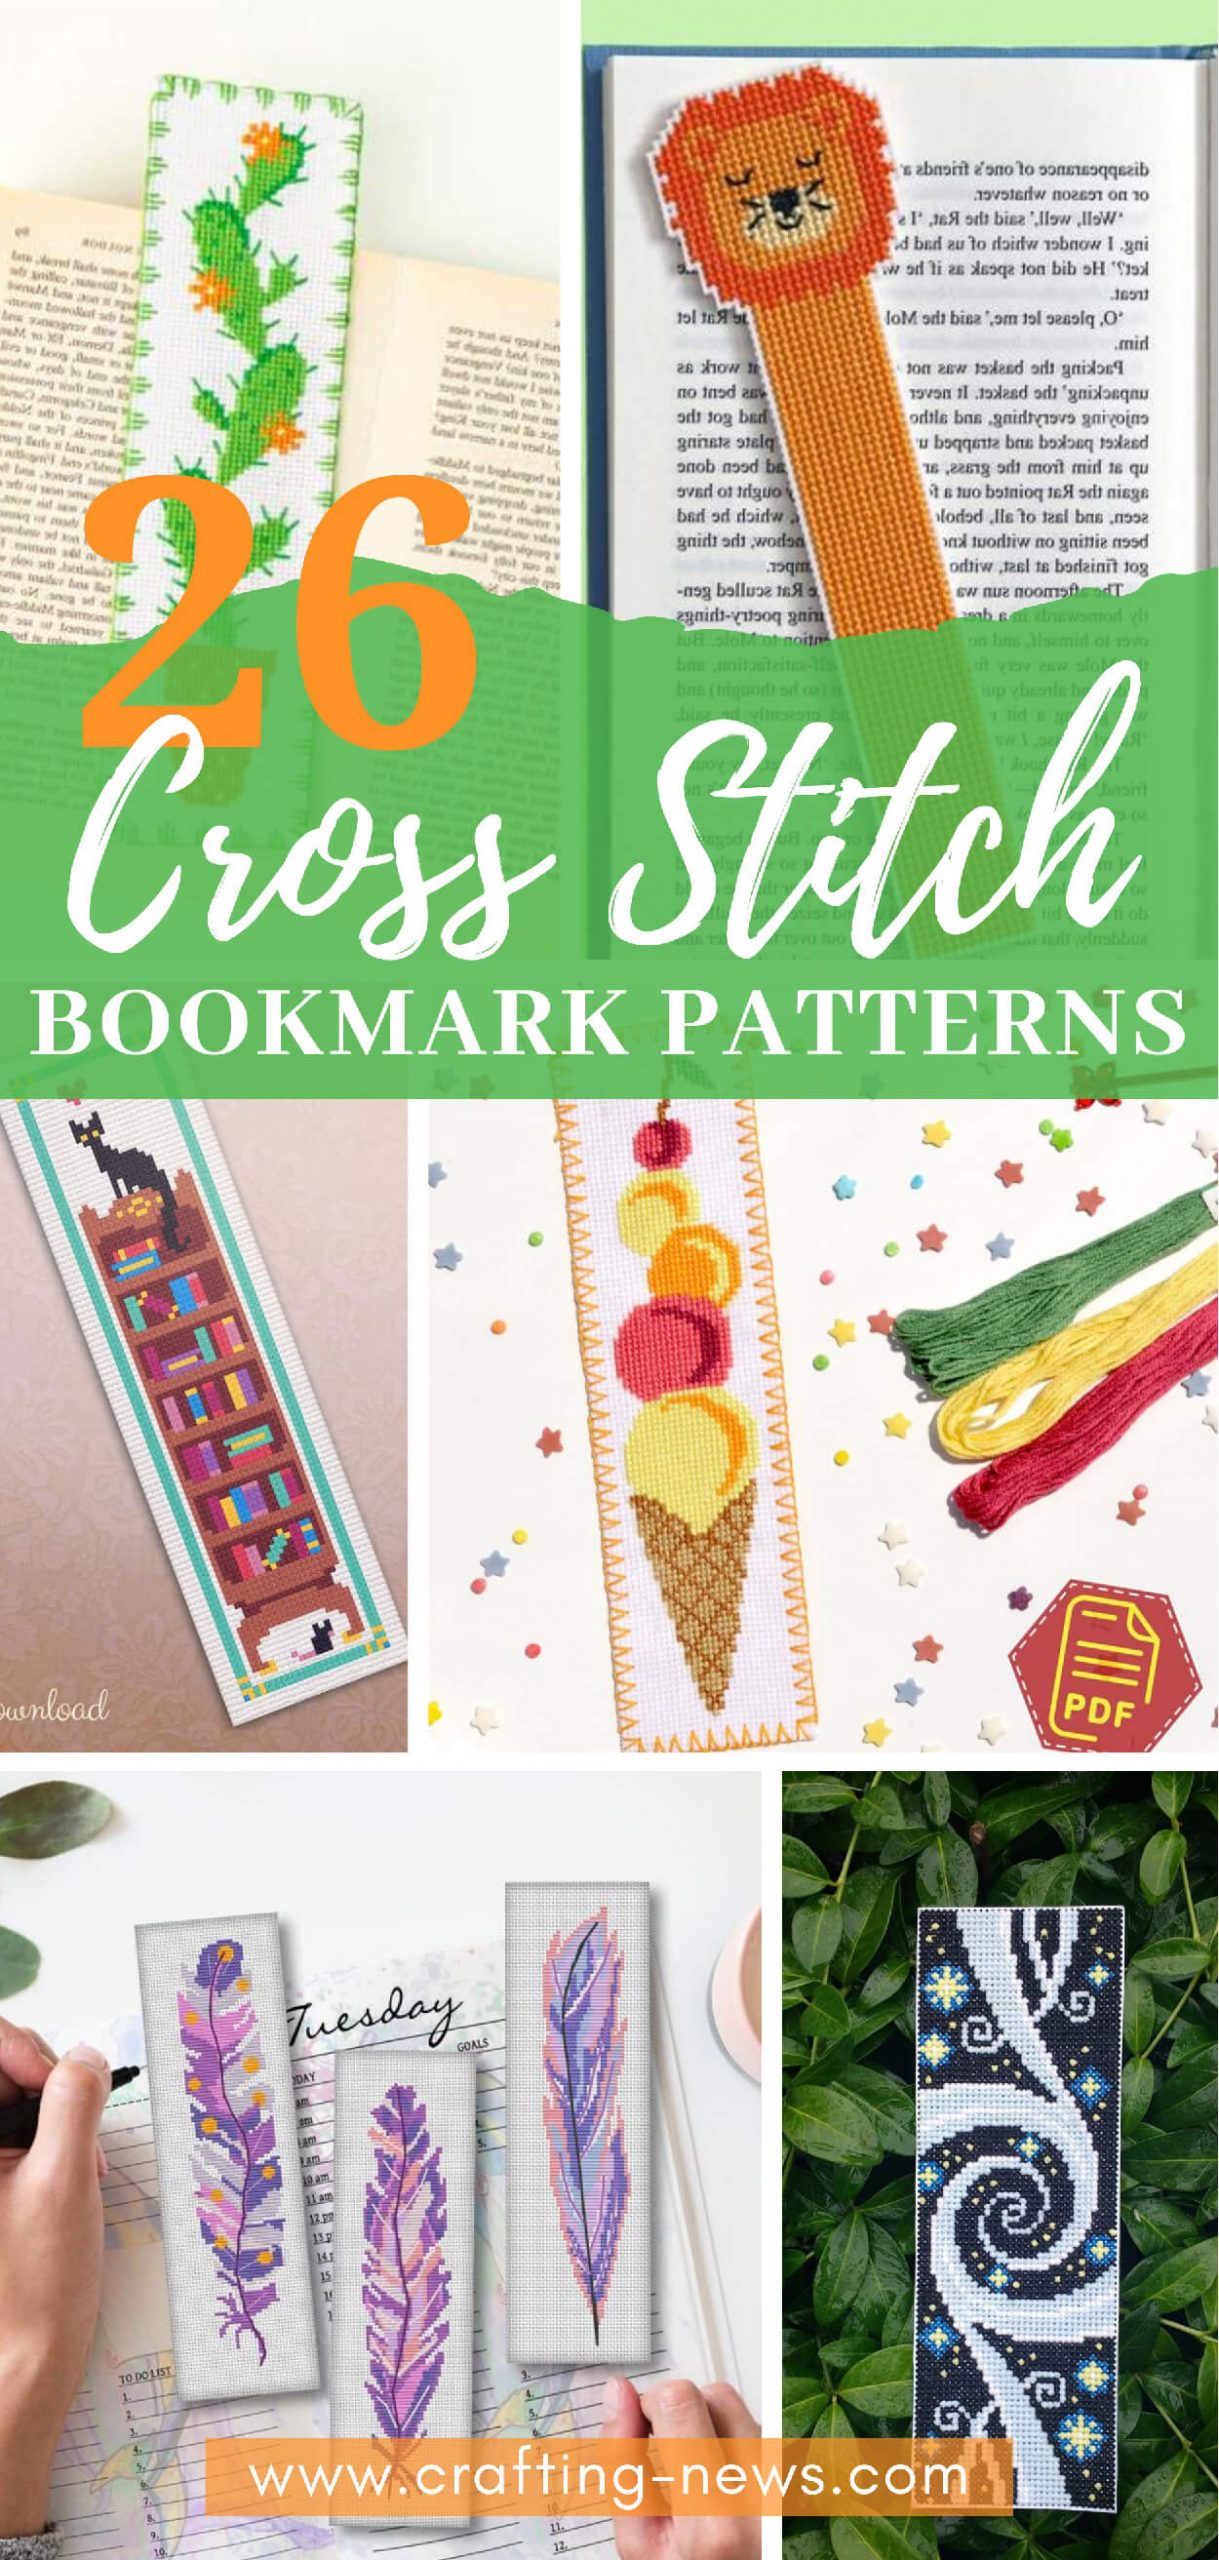 26 Cross Stitch Bookmark Pattern